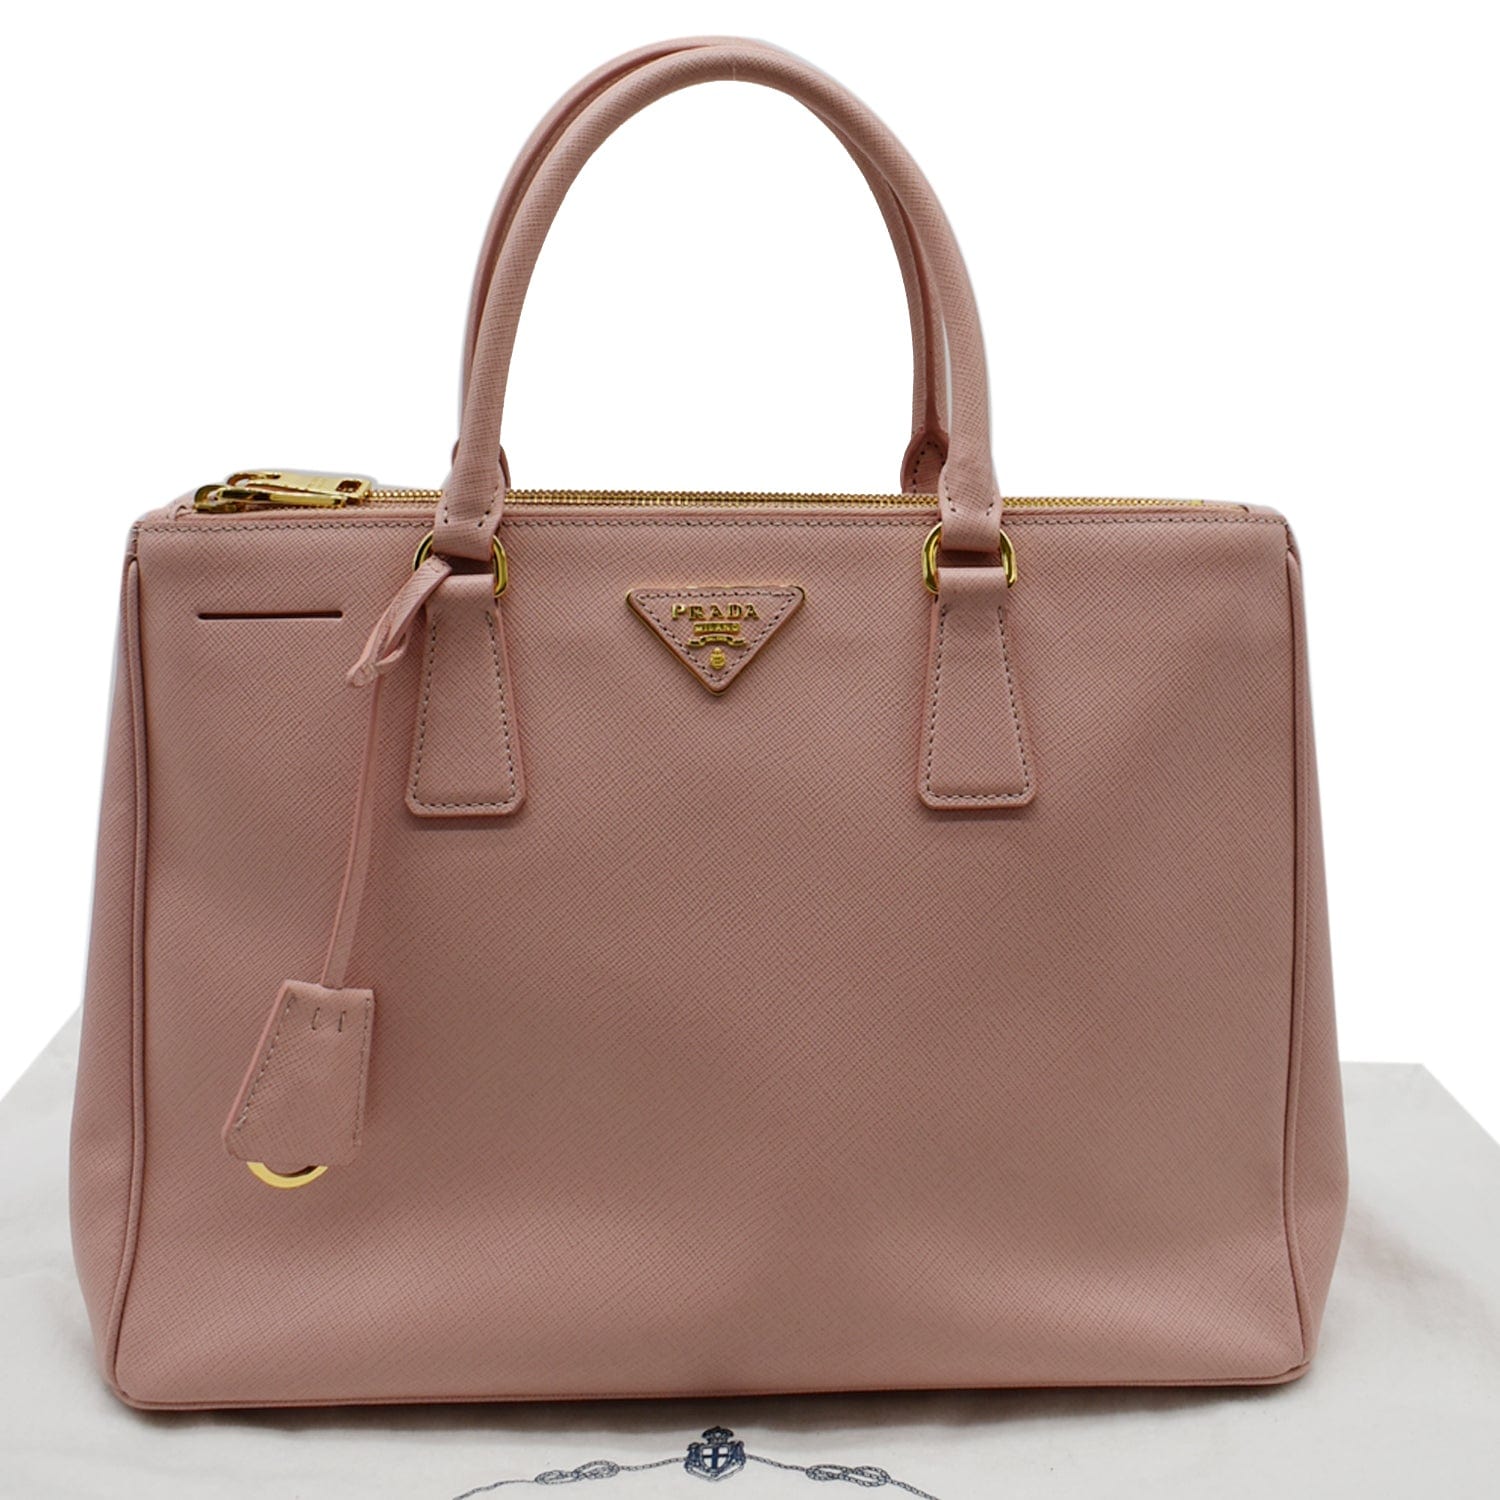 Petal Pink Saffiano Leather Handbag